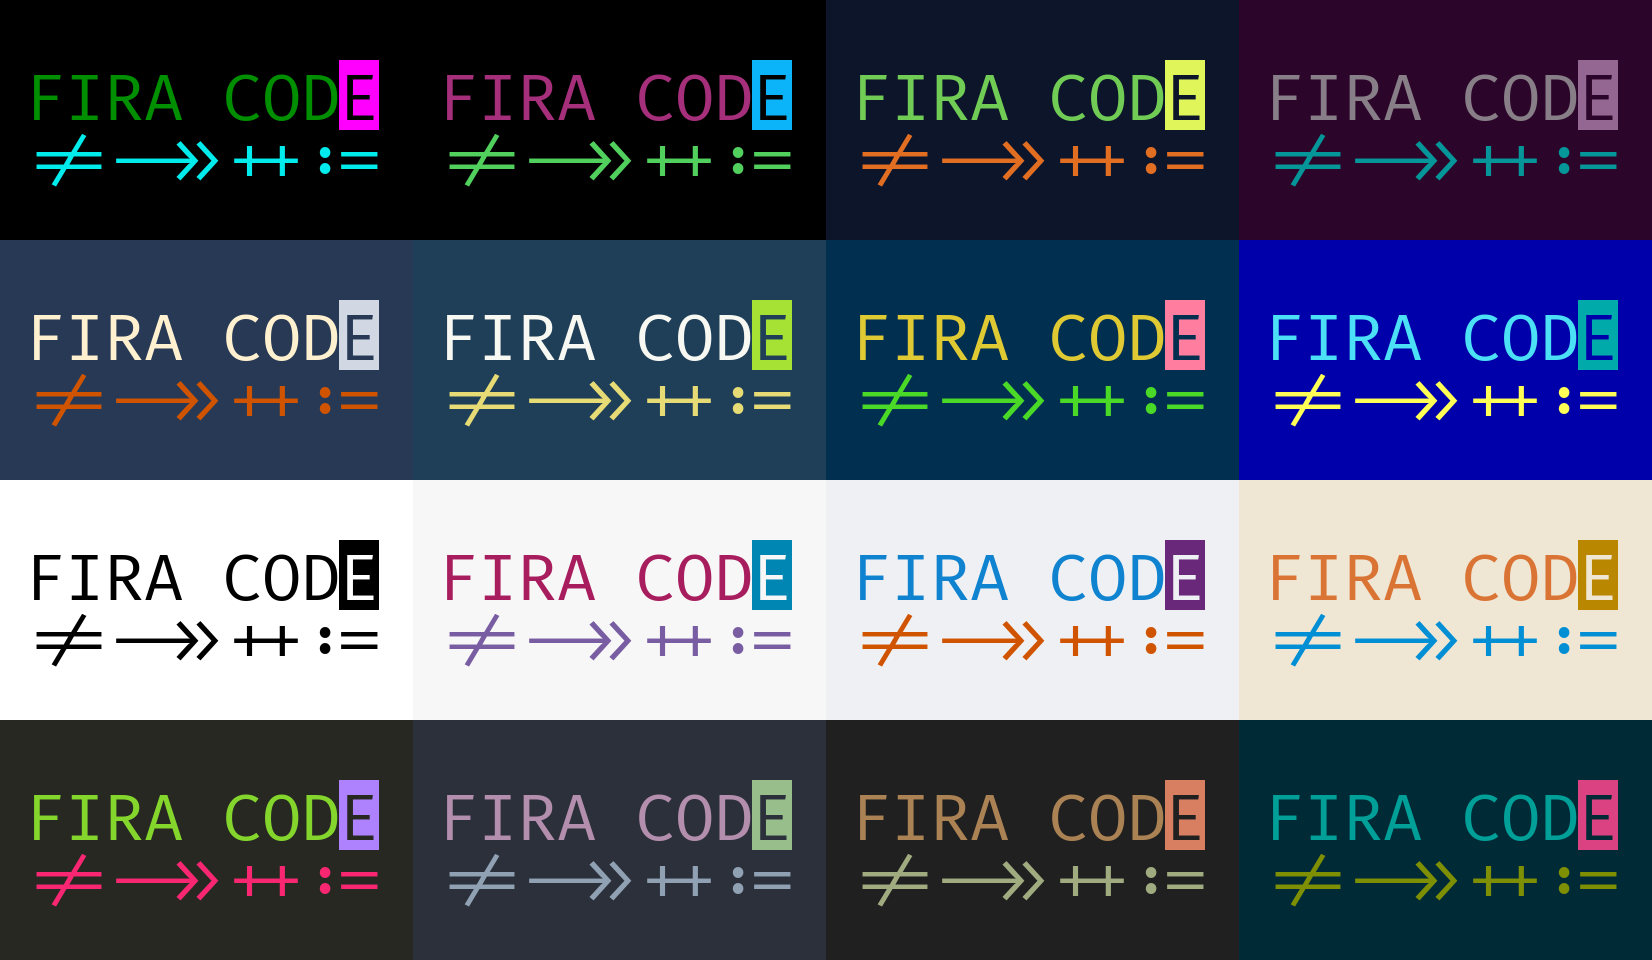 Fira code wall